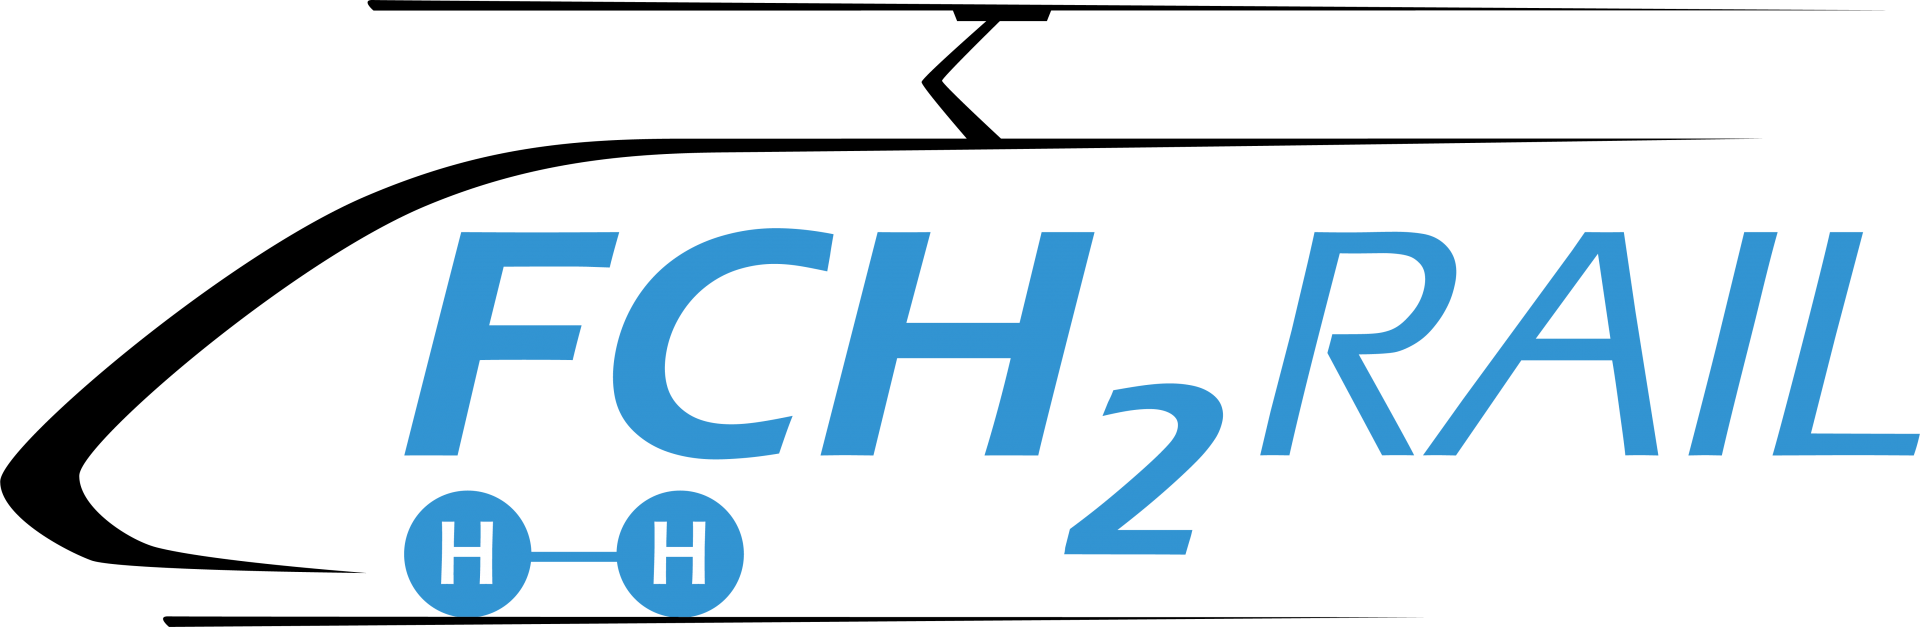 Toyota, civia, logo, FCH2Rail